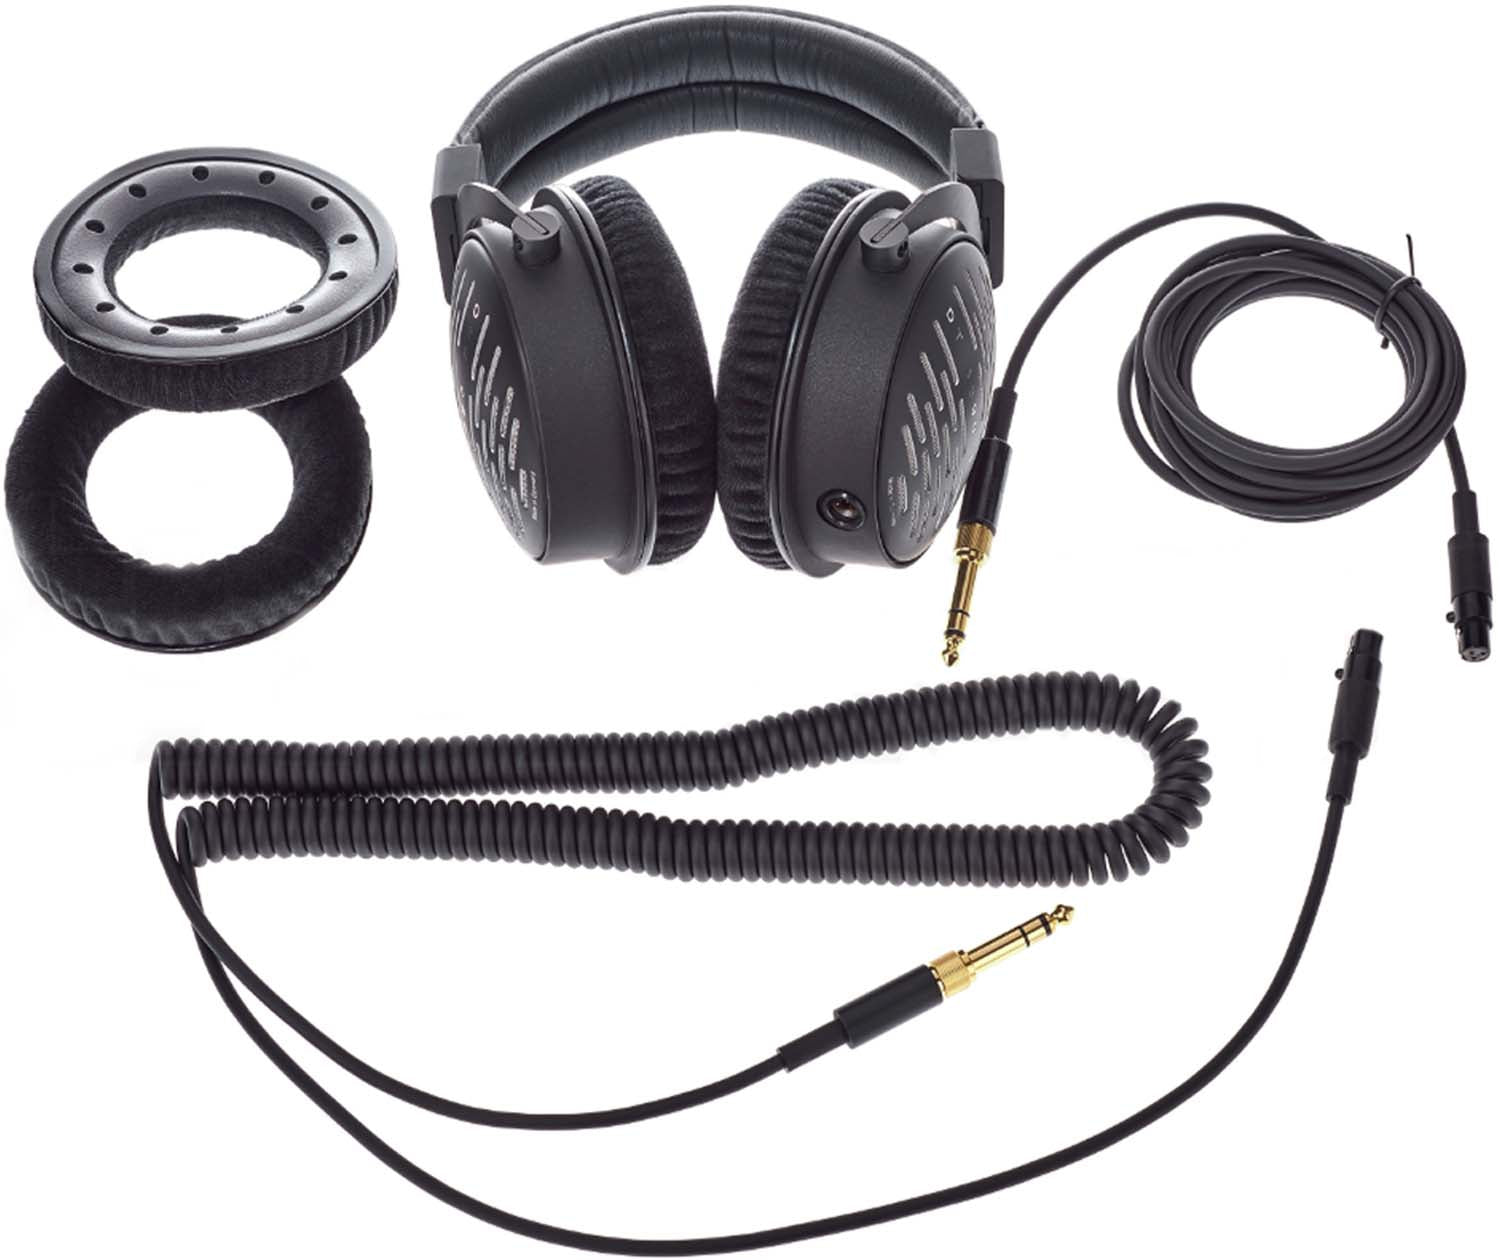 Beyerdynamic DT 1990 Pro Studio Reference Headphones with Headphone Cleaning Kit Starter Bundle